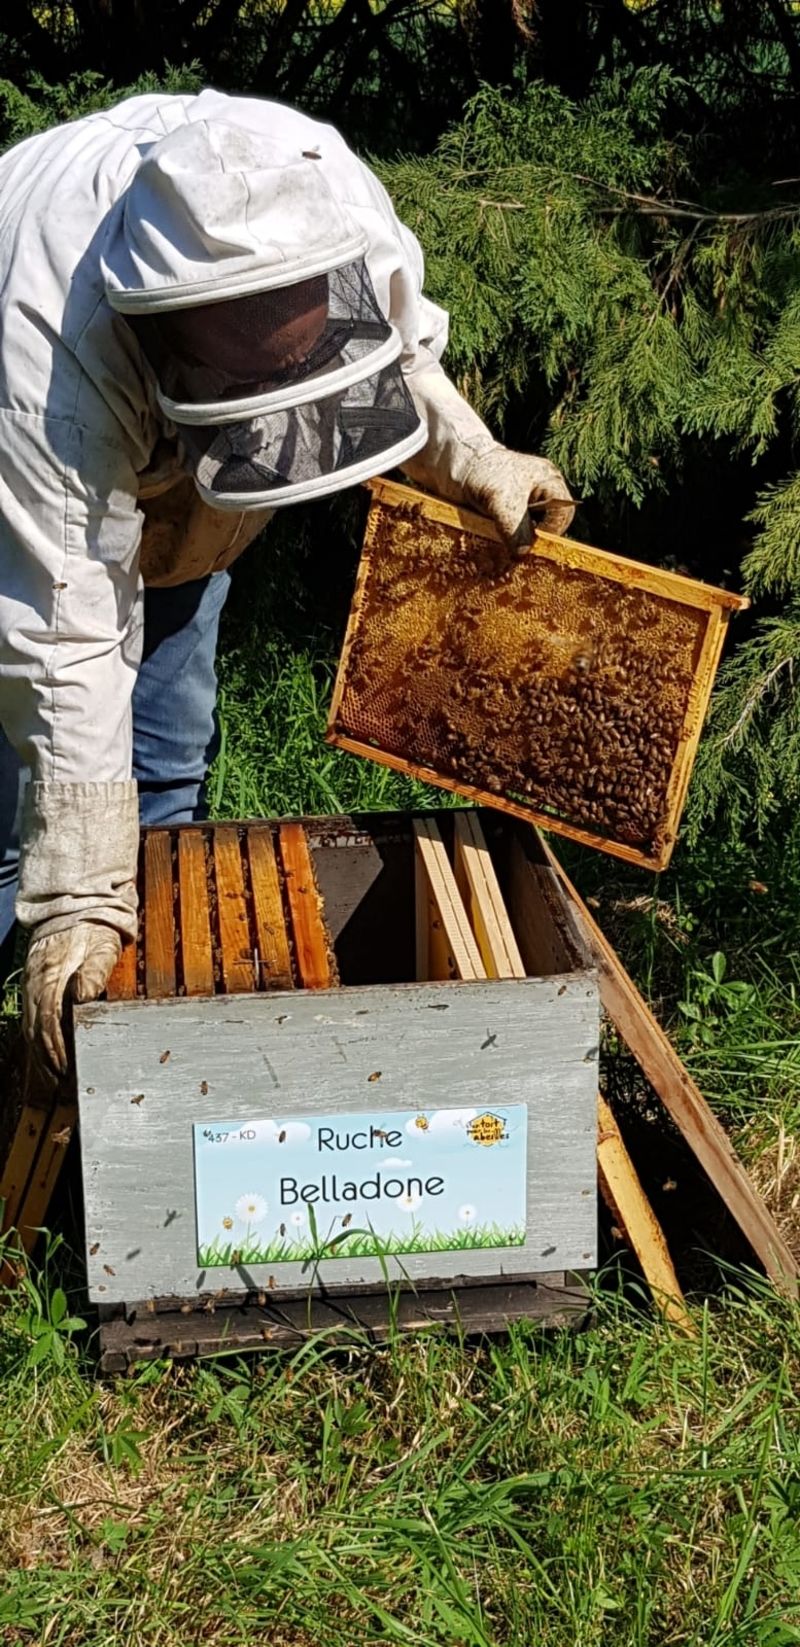 La ruche Belladone